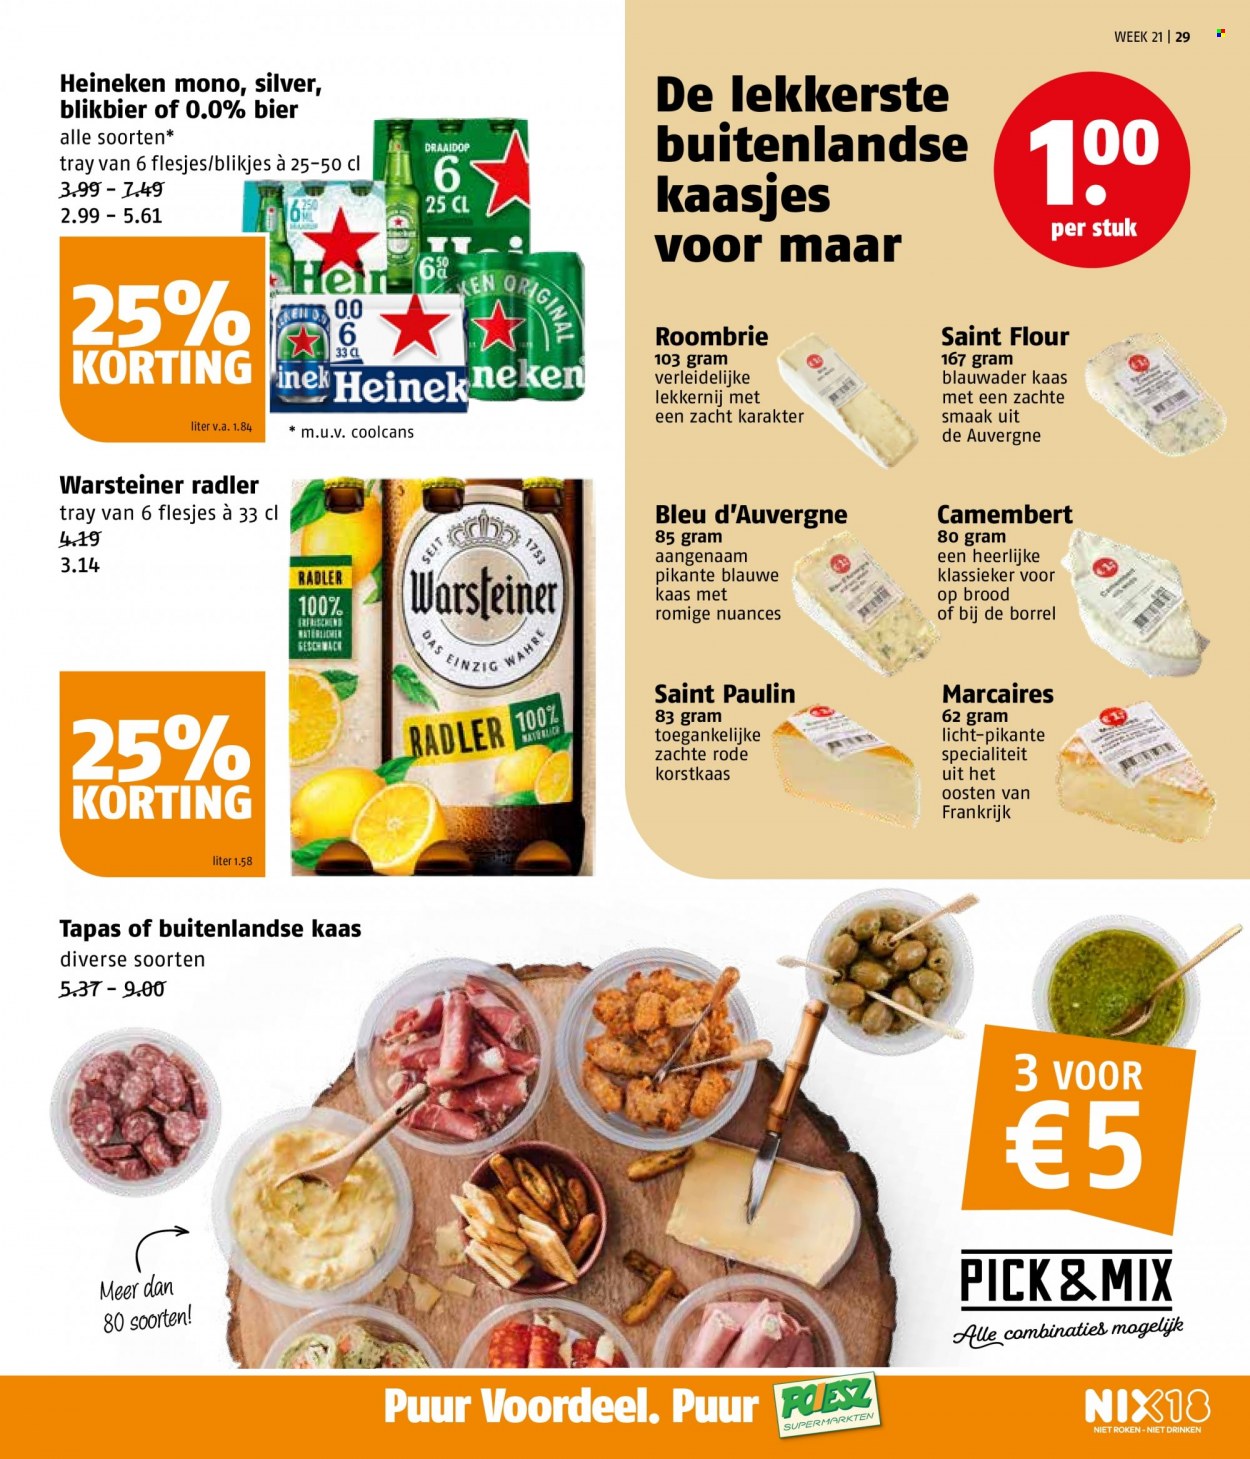 thumbnail - Poiesz-aanbieding - 23-5-2022 - 29-5-2022 -  producten in de aanbieding - Warsteiner, Heineken, bier, brood, tapas, Bleu d'Auvergne, Camembert, kaas. Pagina 29.